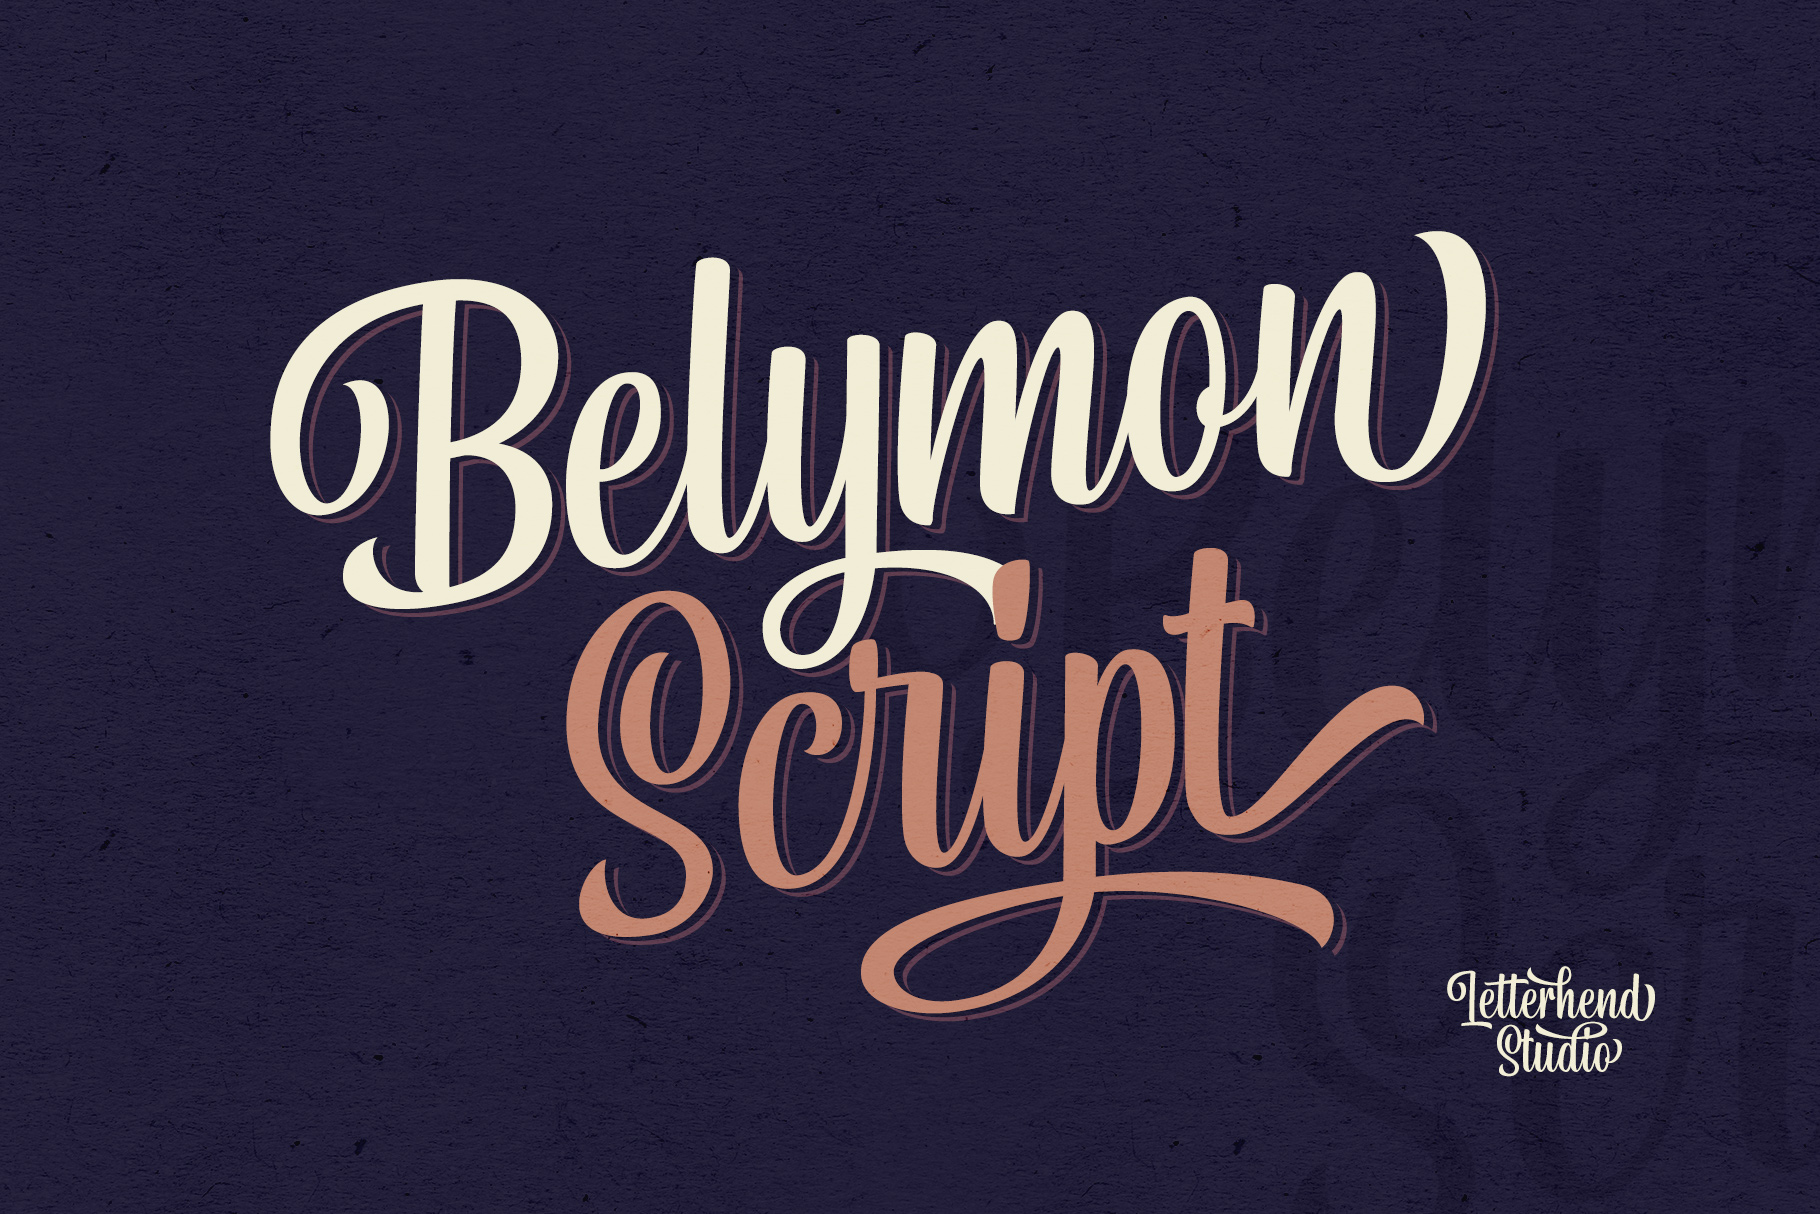 Belymon Script DEMO